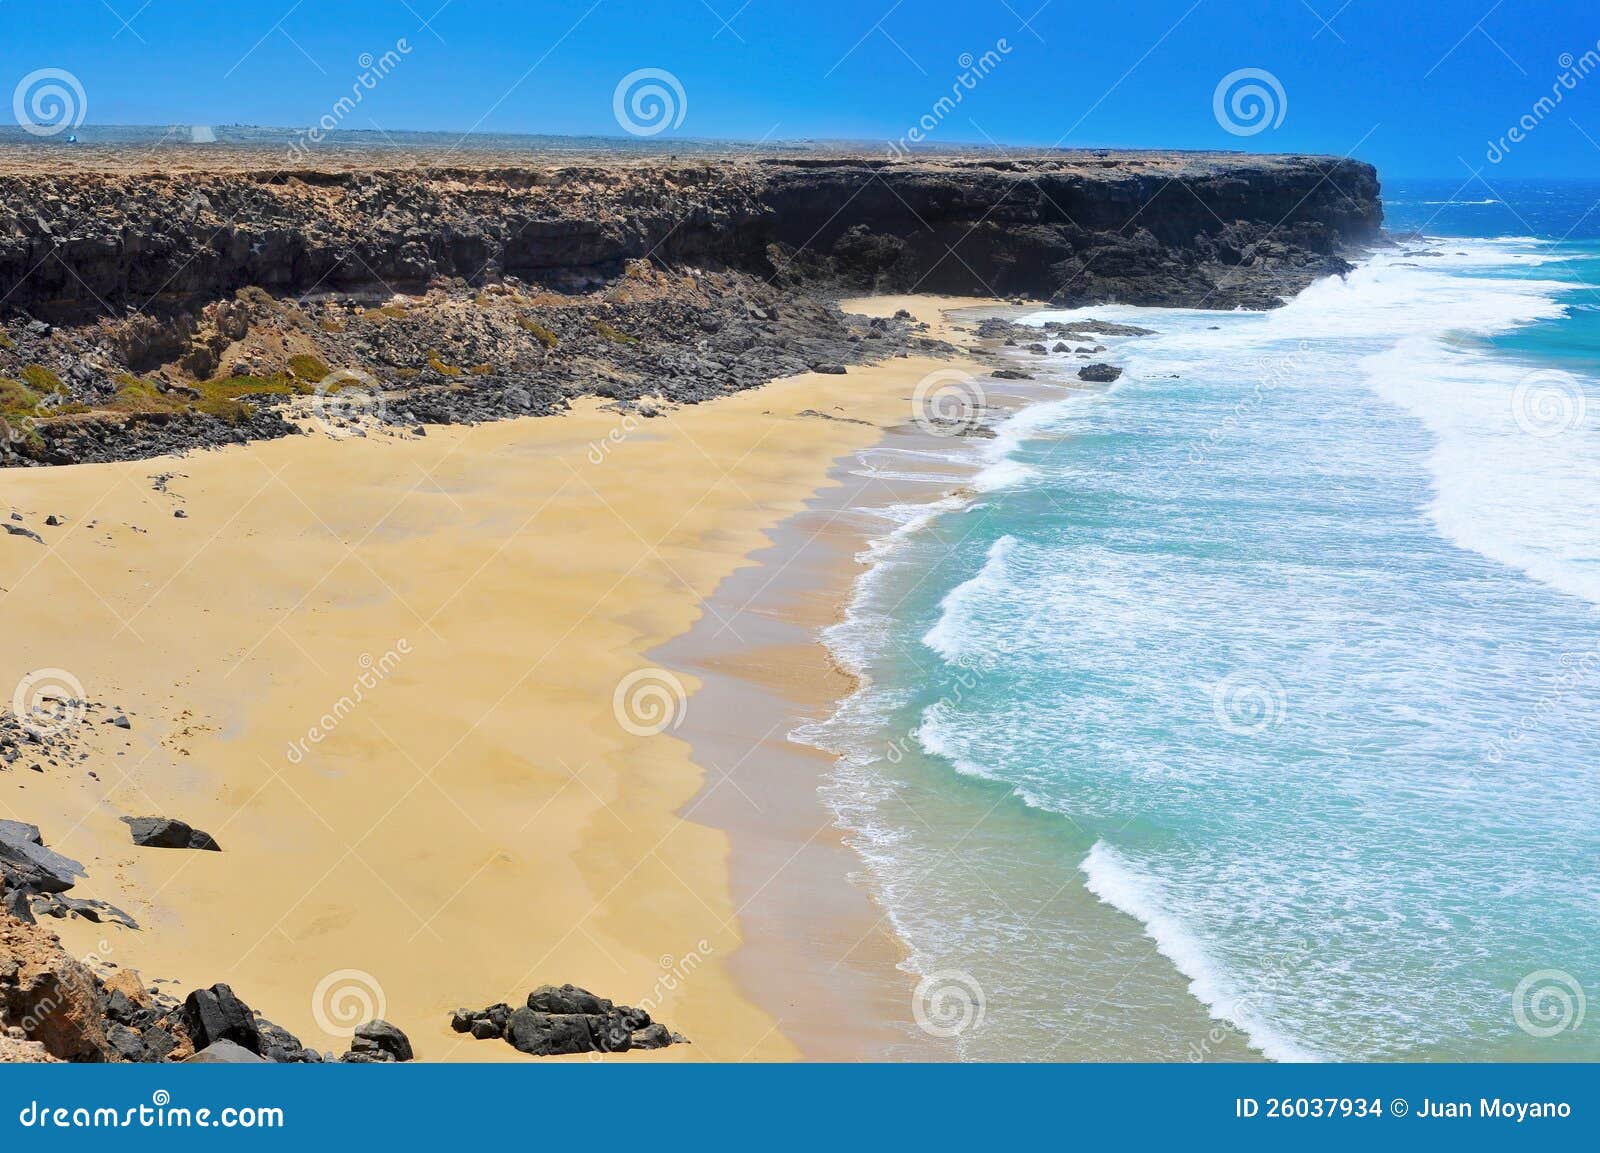 aljibe de la cueva beach in fuerteventura, spain